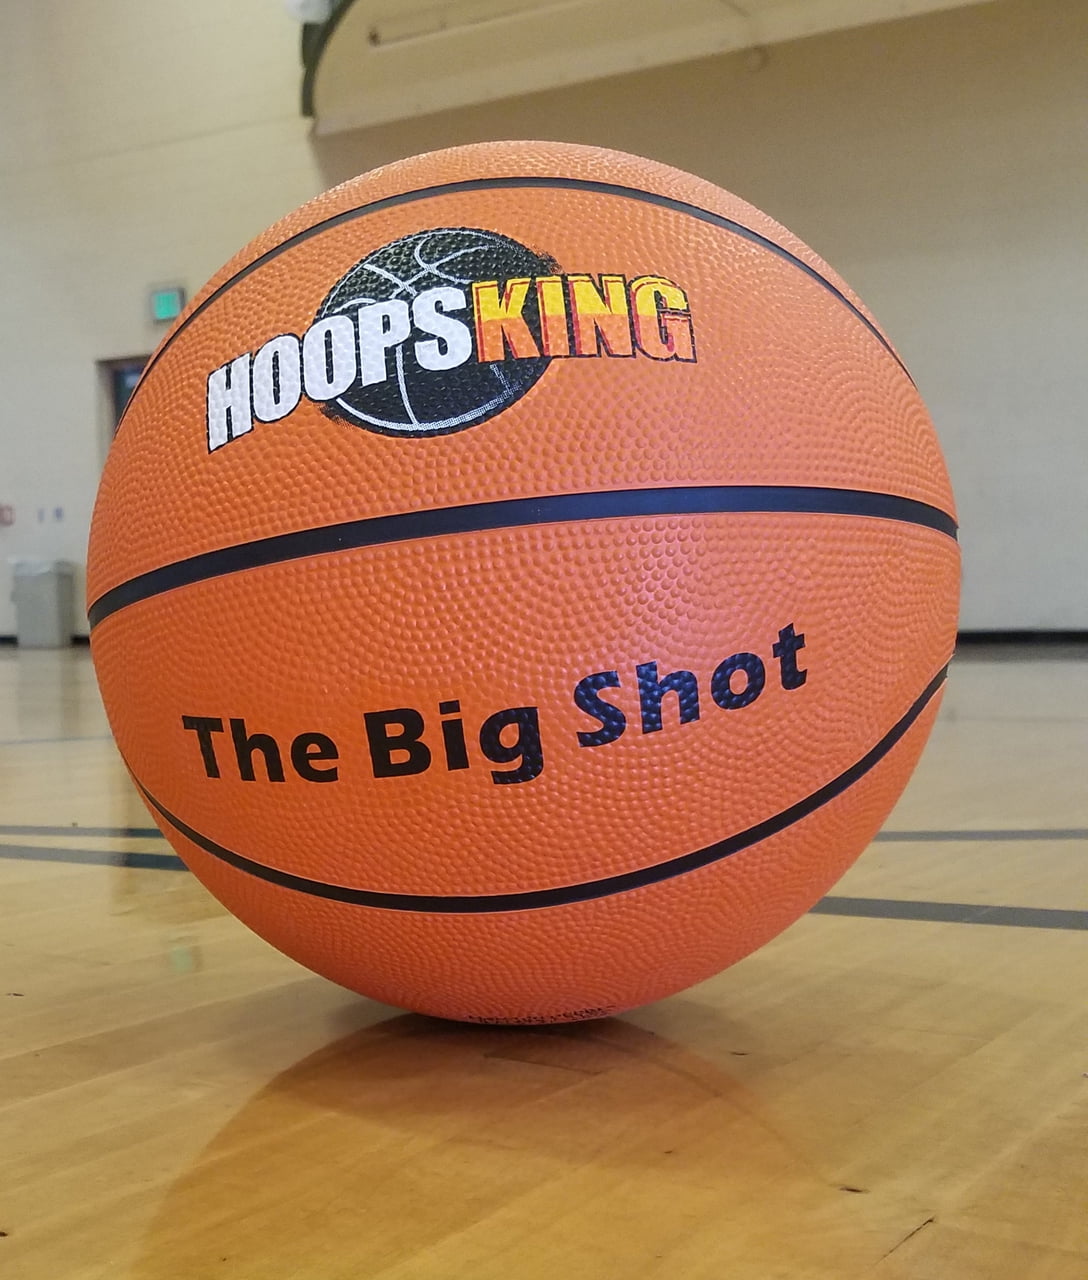 HoopsKing Hot Shot Basketball Shooting Aid 